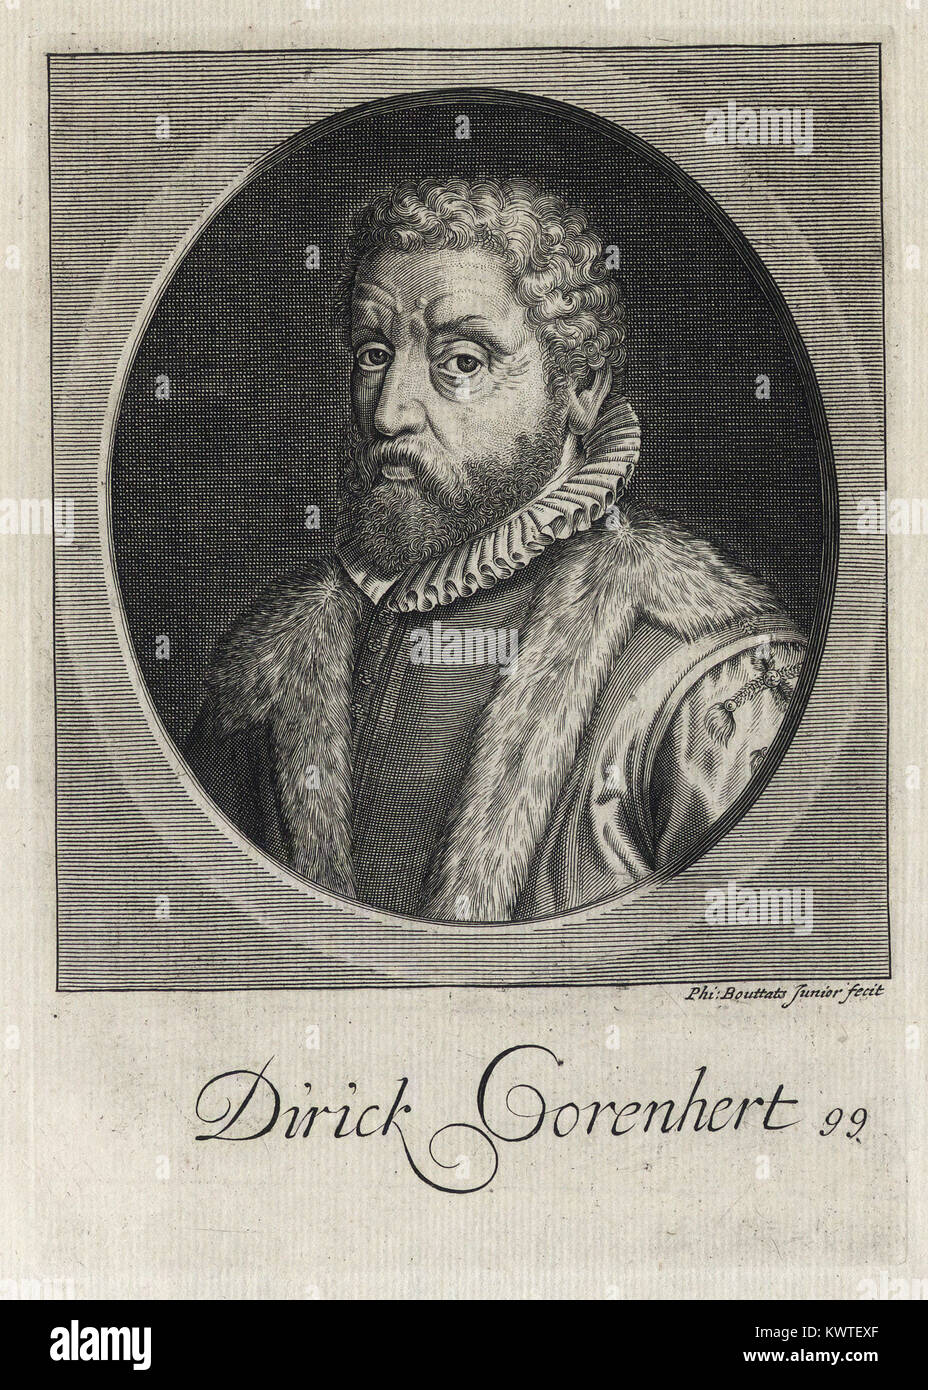 DIRICK GORENHERT - Woodcut portrait   - Engraving 17th century Stock Photo